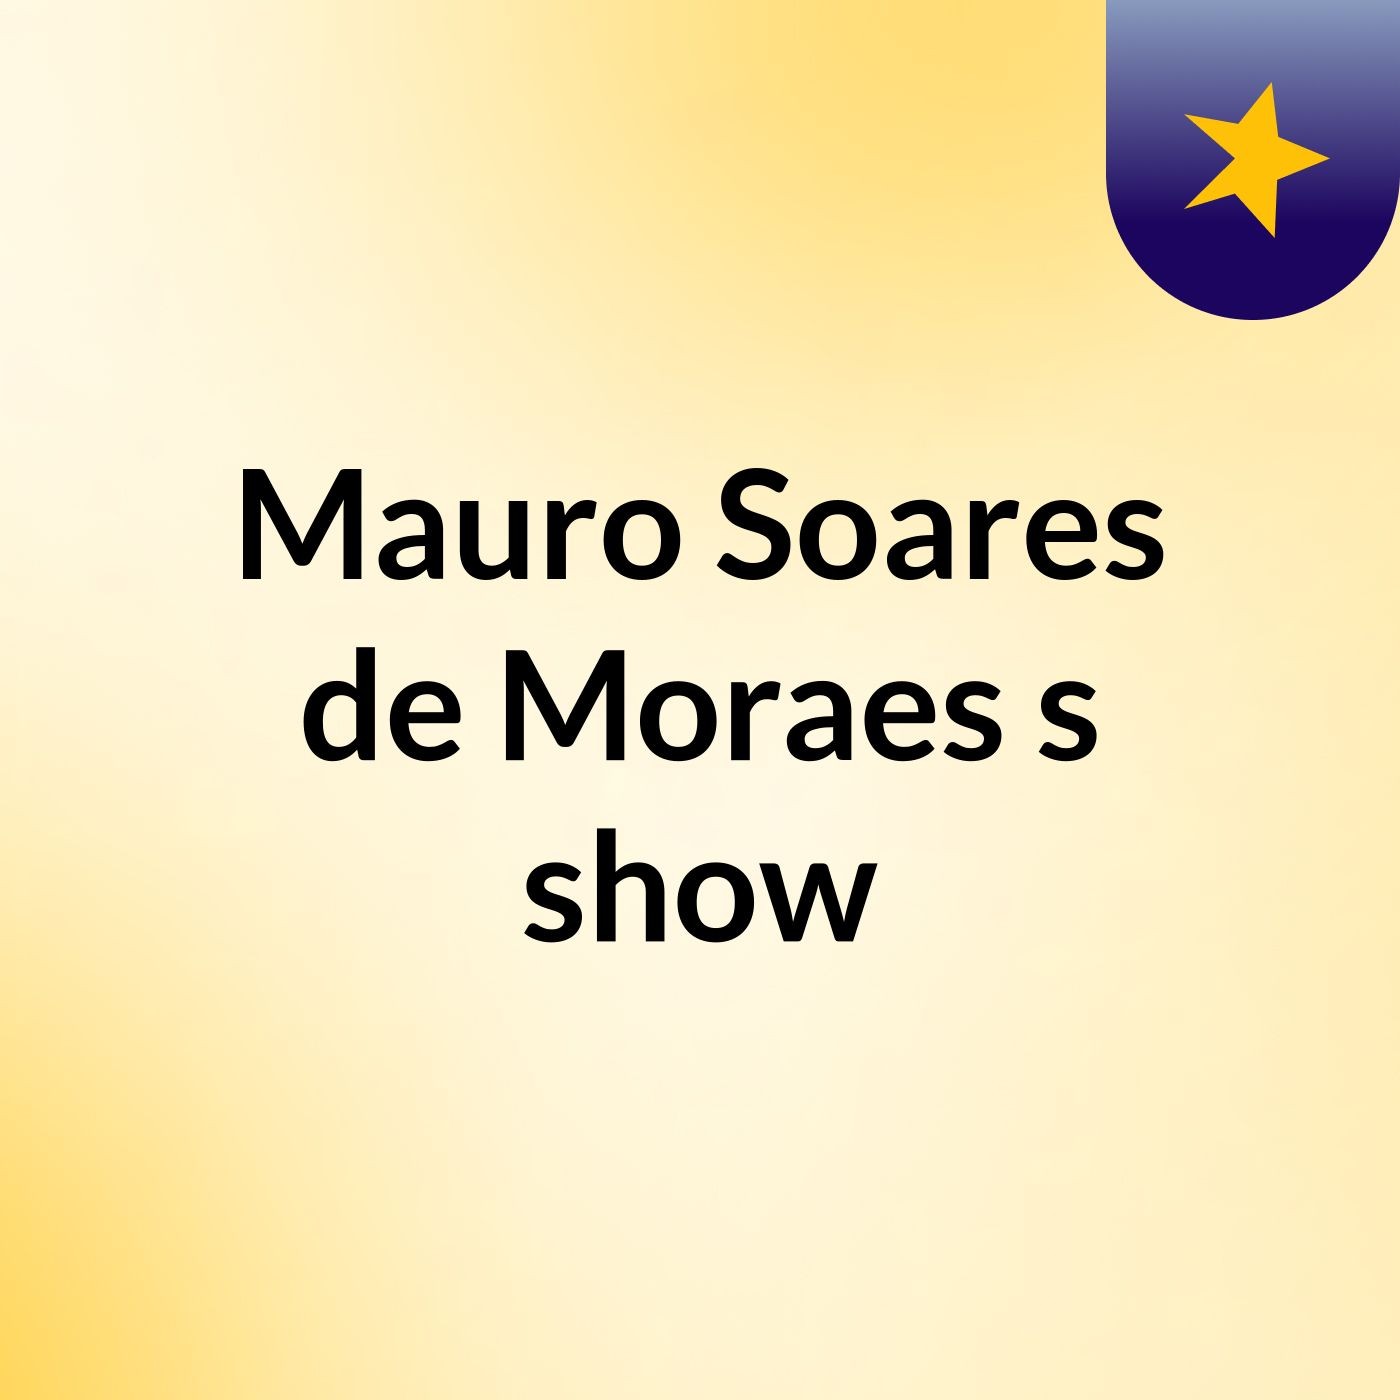 Mauro Soares de Moraes's show